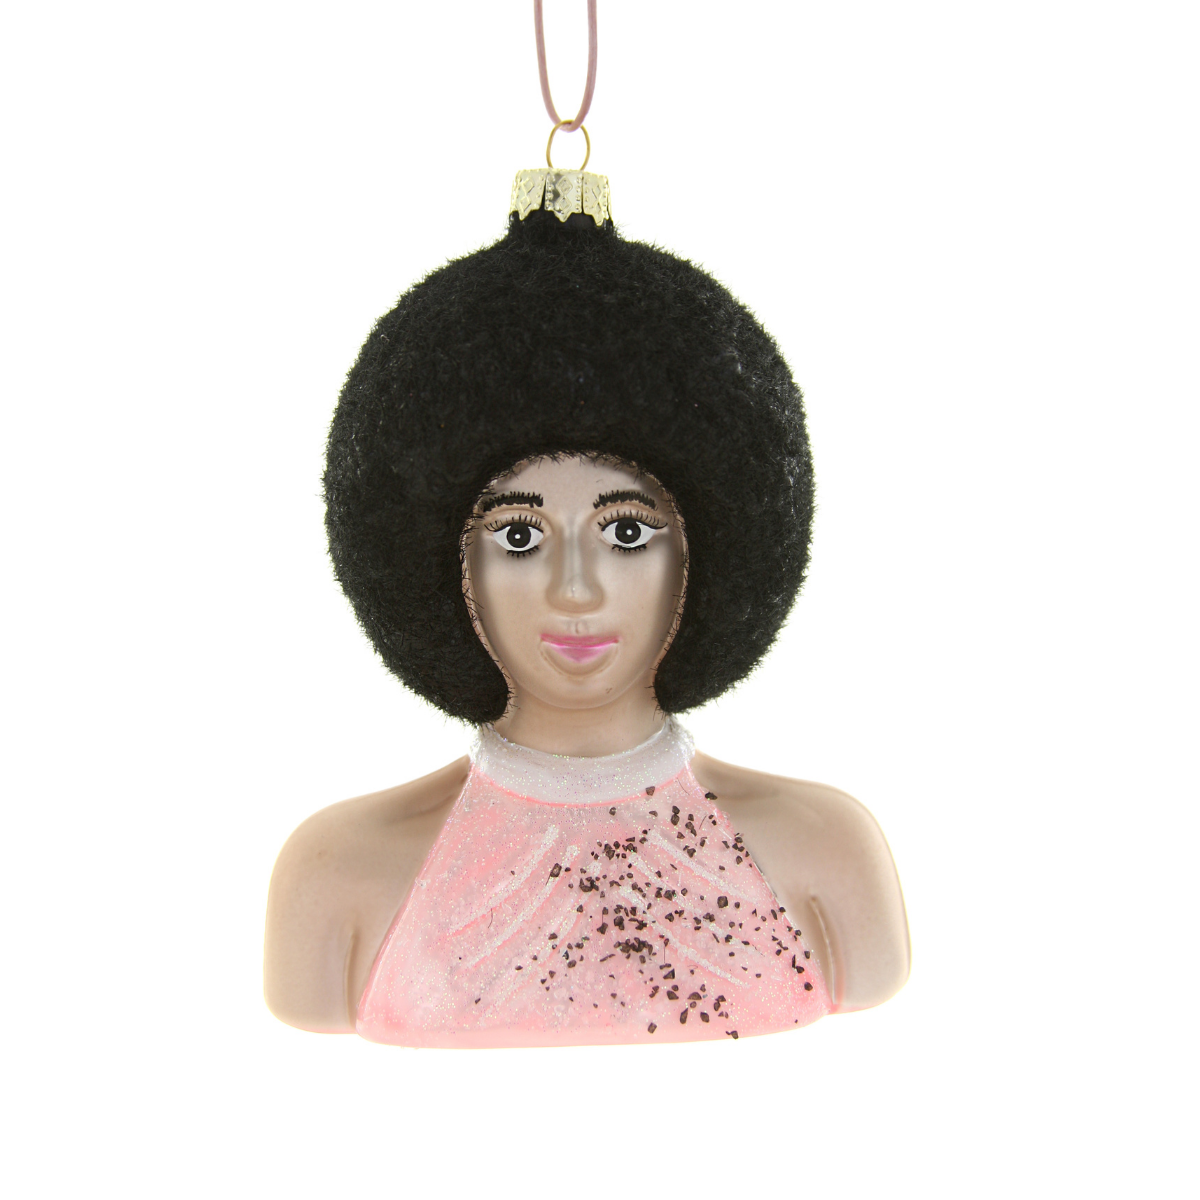 Diana Ross Ornament